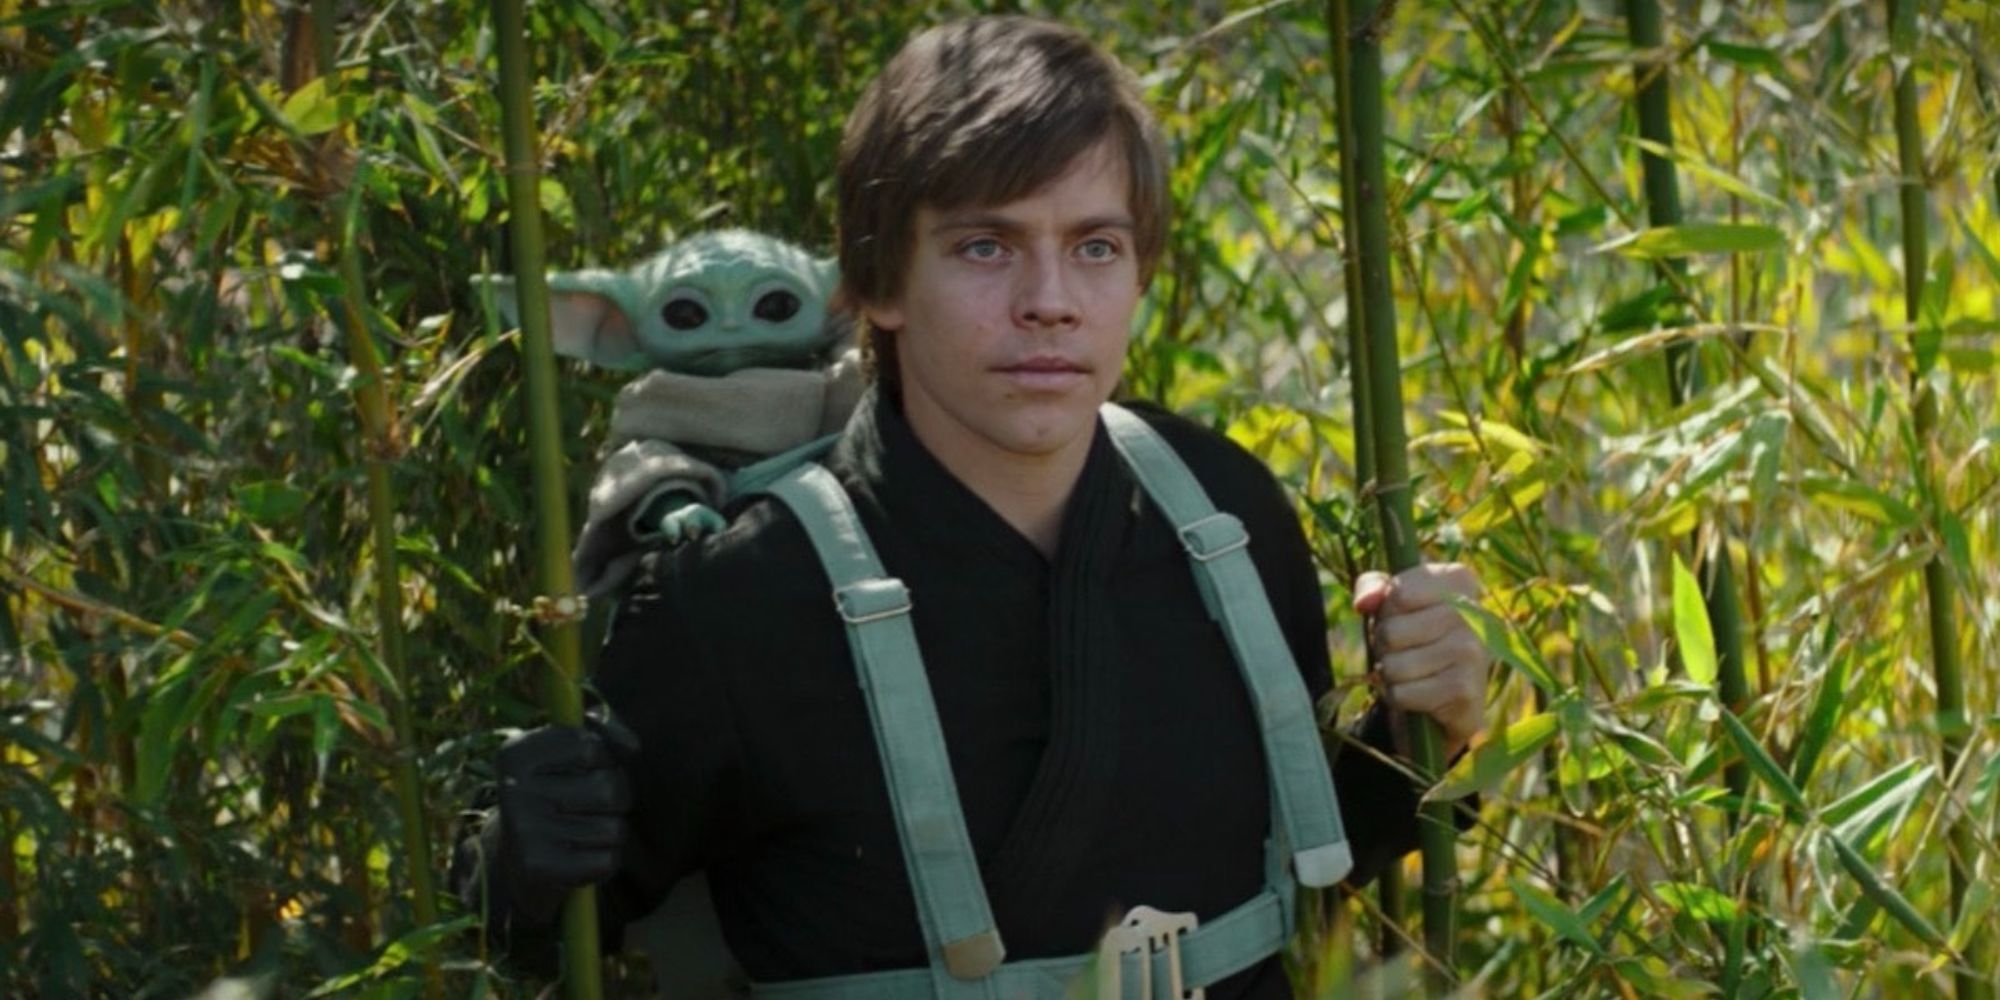 Luke Skywalker walking through the woods with Grogu on his back in The Mandalorian